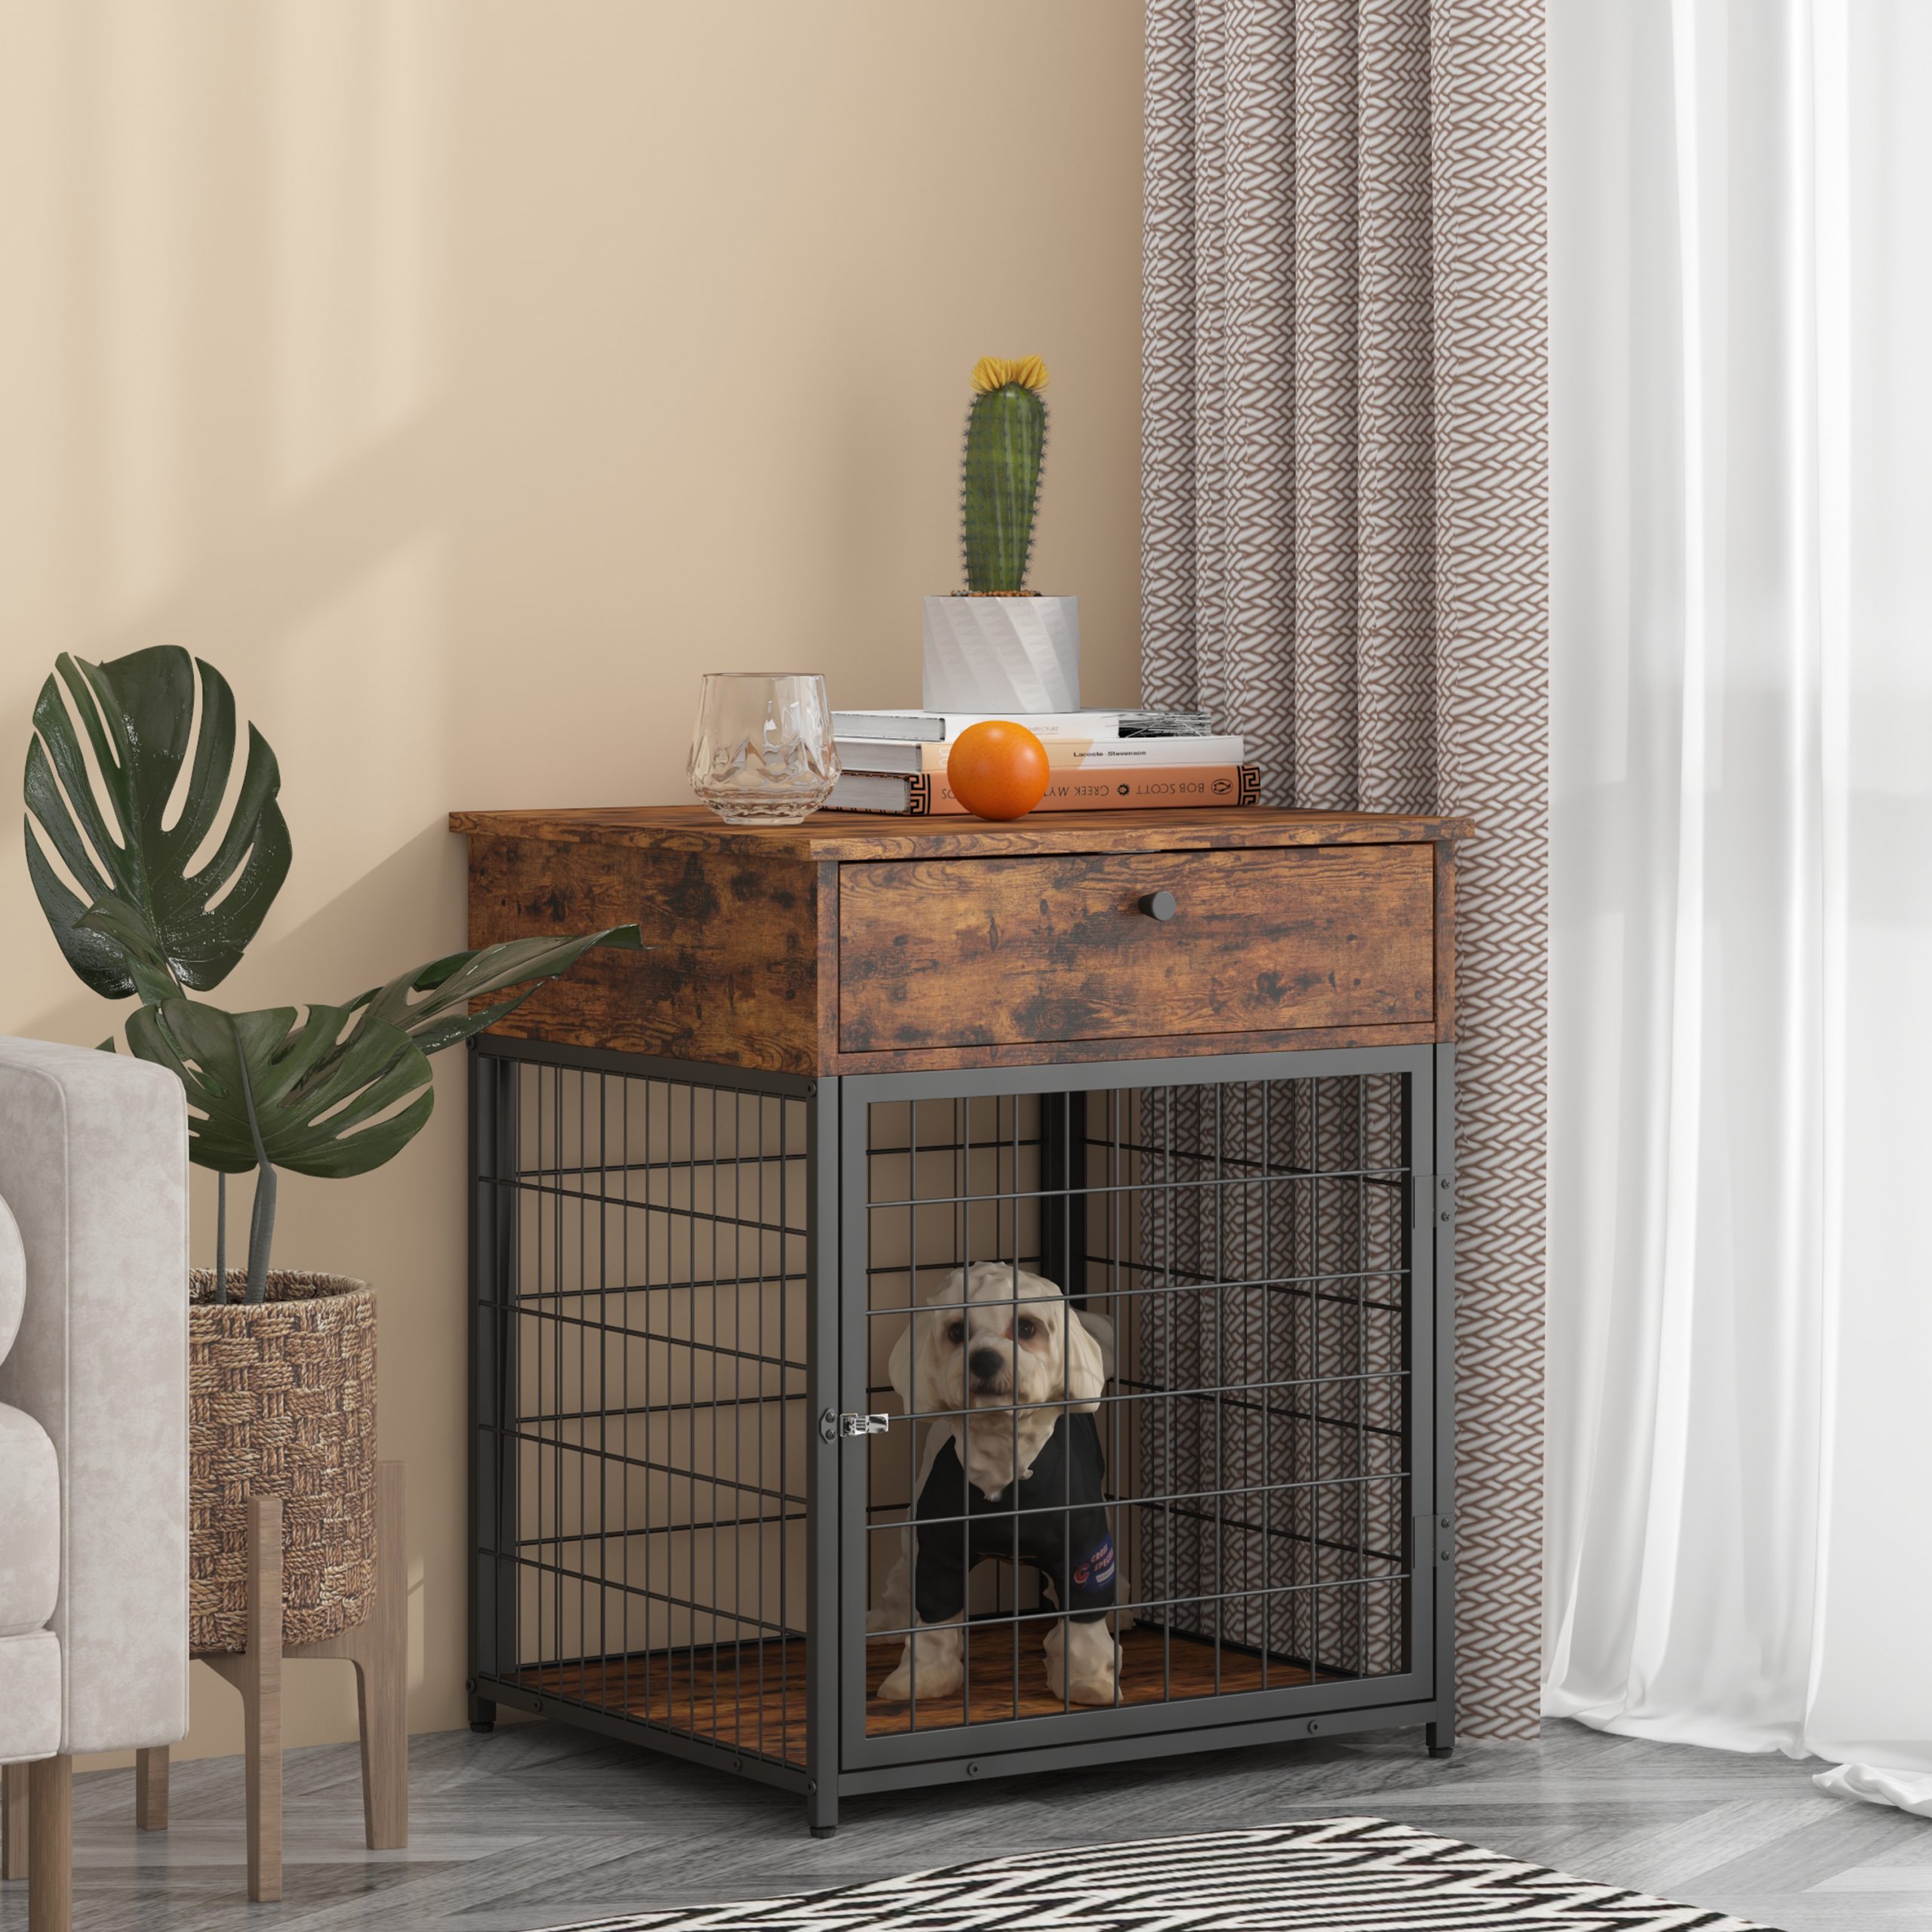 Furniture Dog Crates